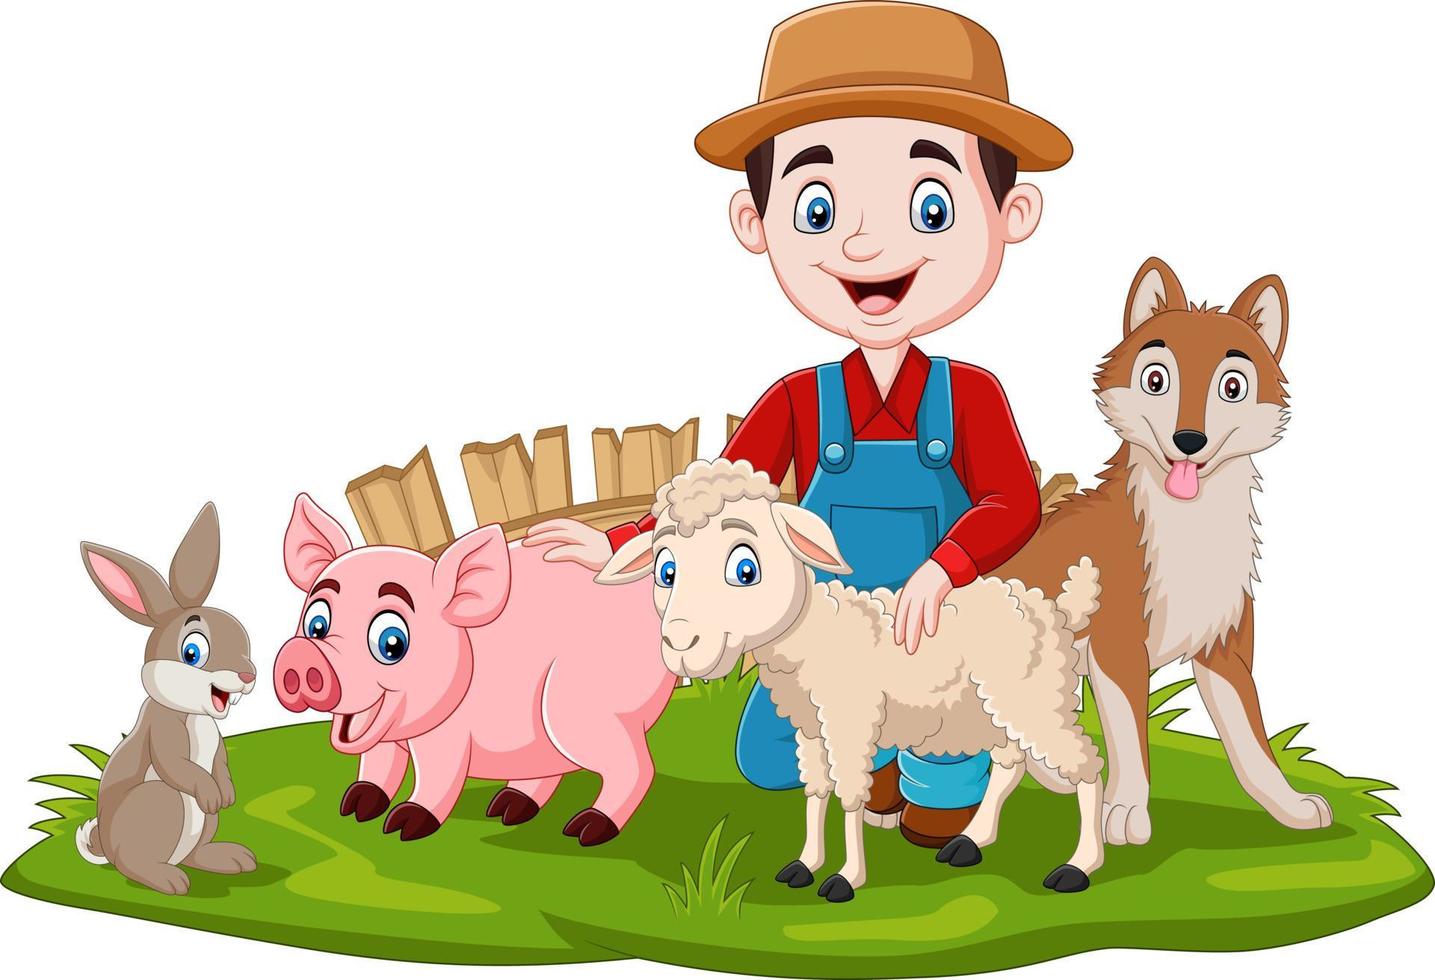 Farmer with farm animals in the grass vector